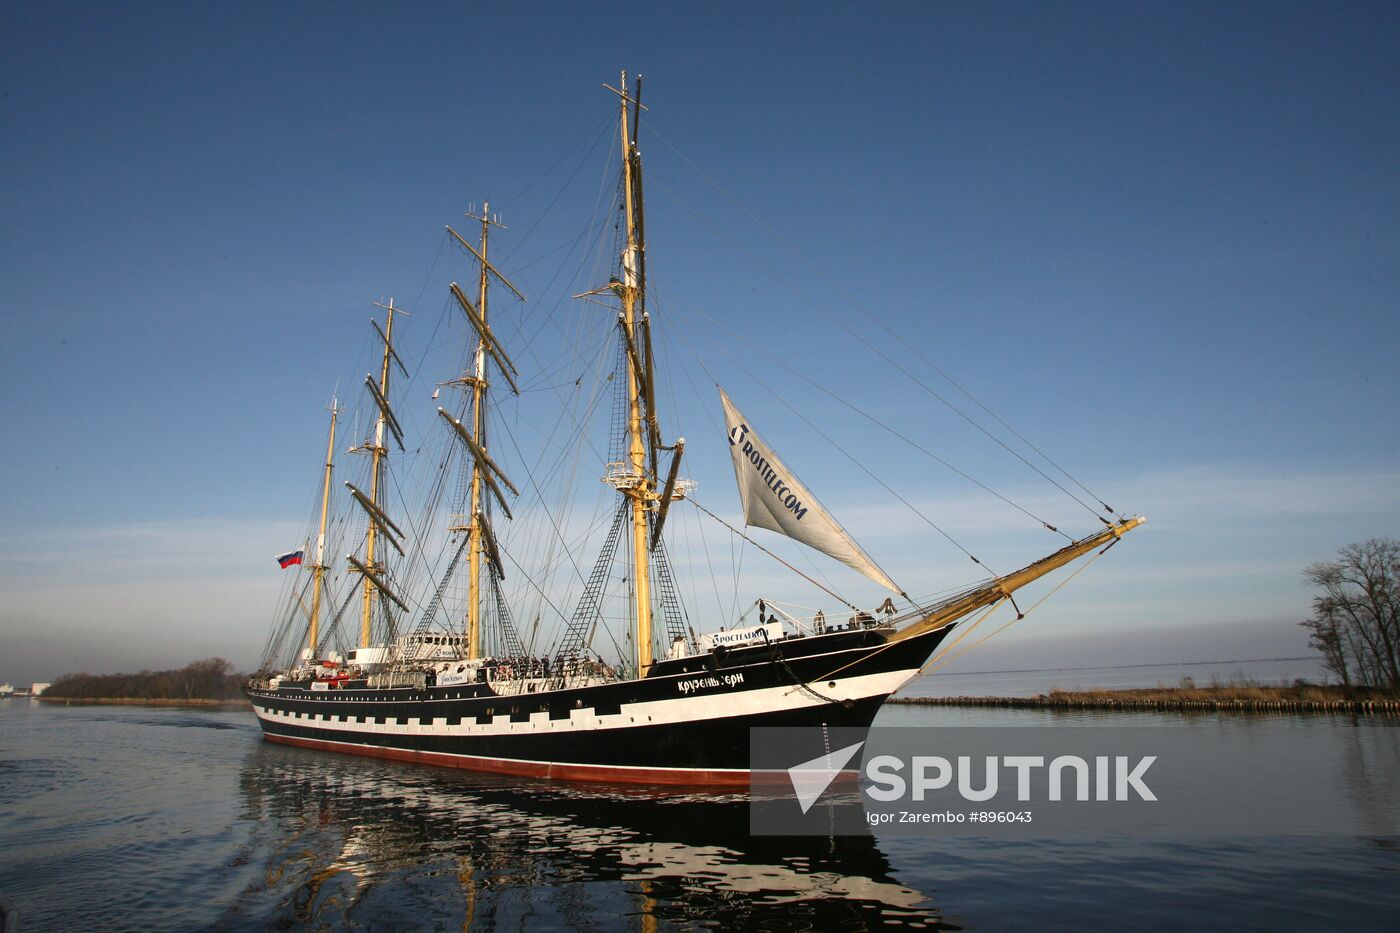 Sailing ship "Kruzenshtern" out on a training voyage